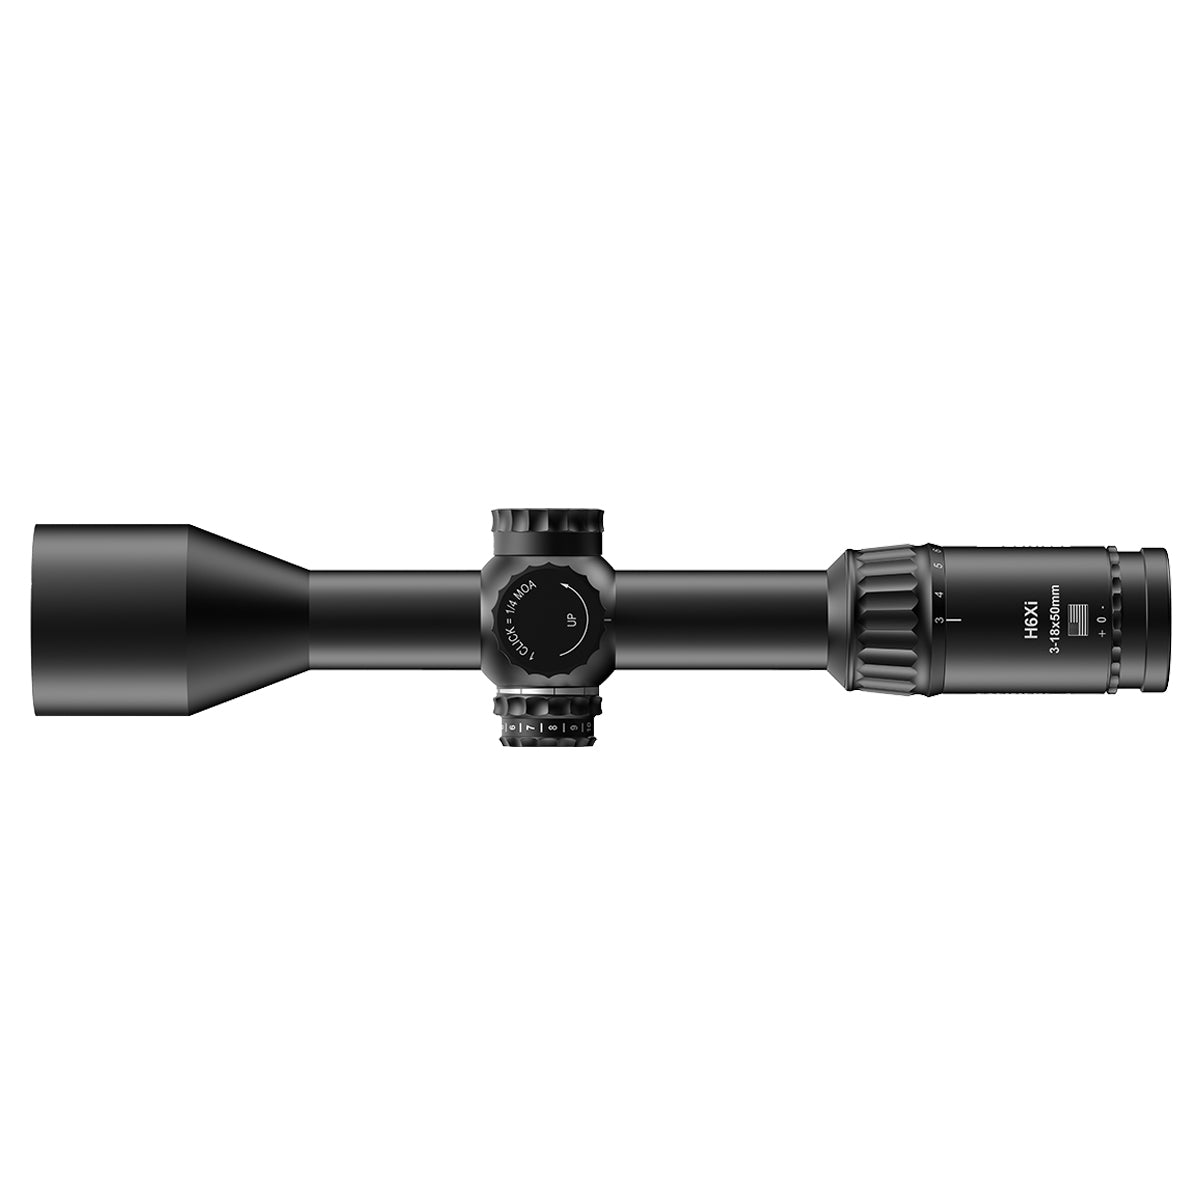 Steiner Optics H6Xi 3-18x50 MHR-MOA Riflescope in  by GOHUNT | Steiner Optics - GOHUNT Shop